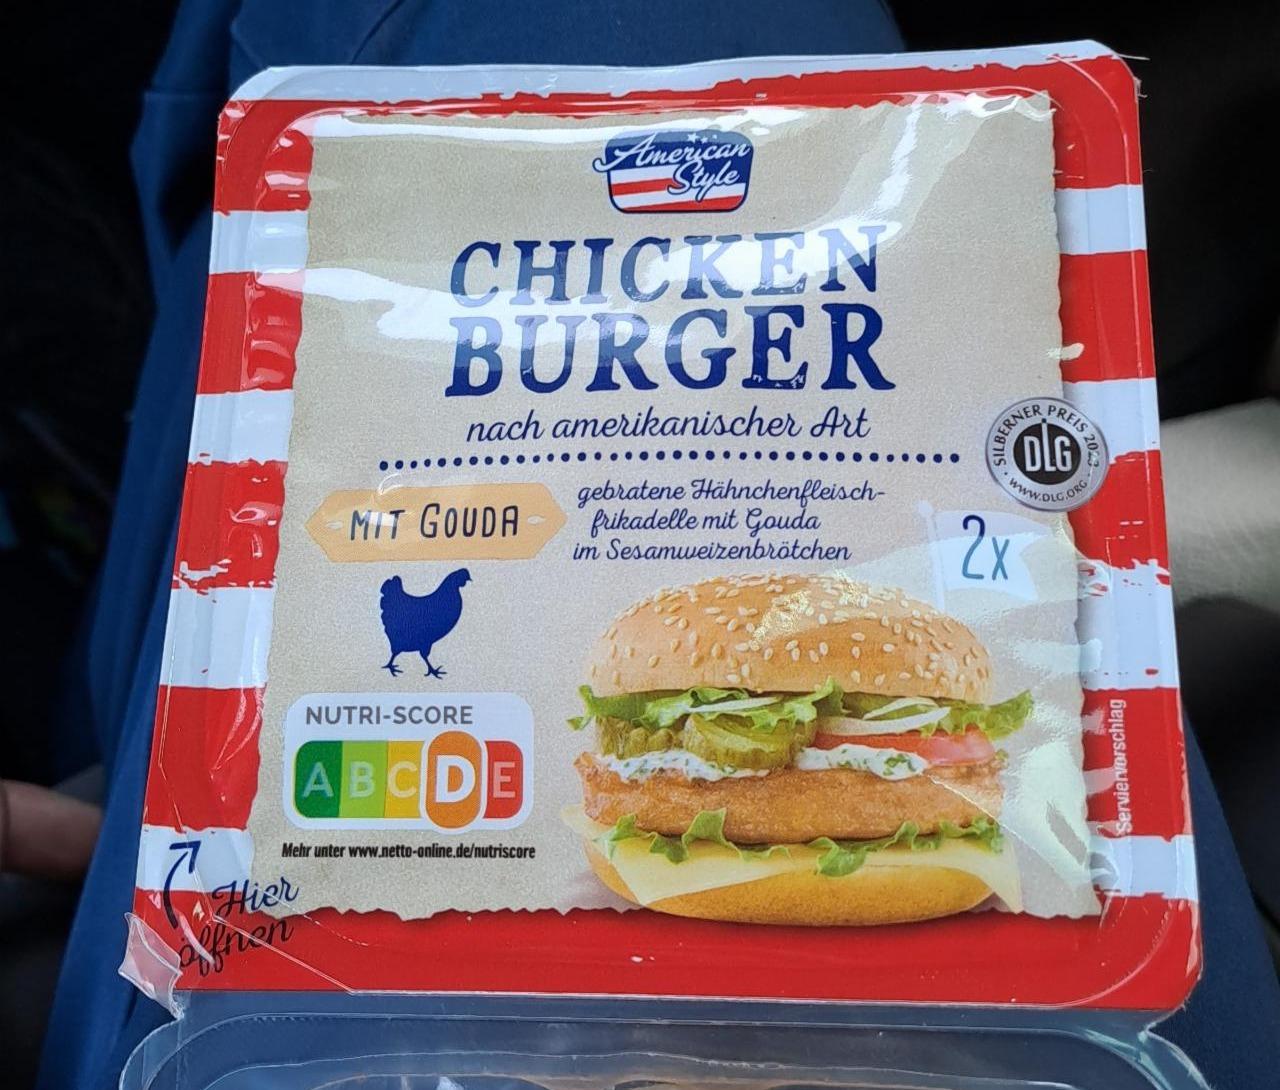 Фото - Fertiggerichte Chicken Burger American Style